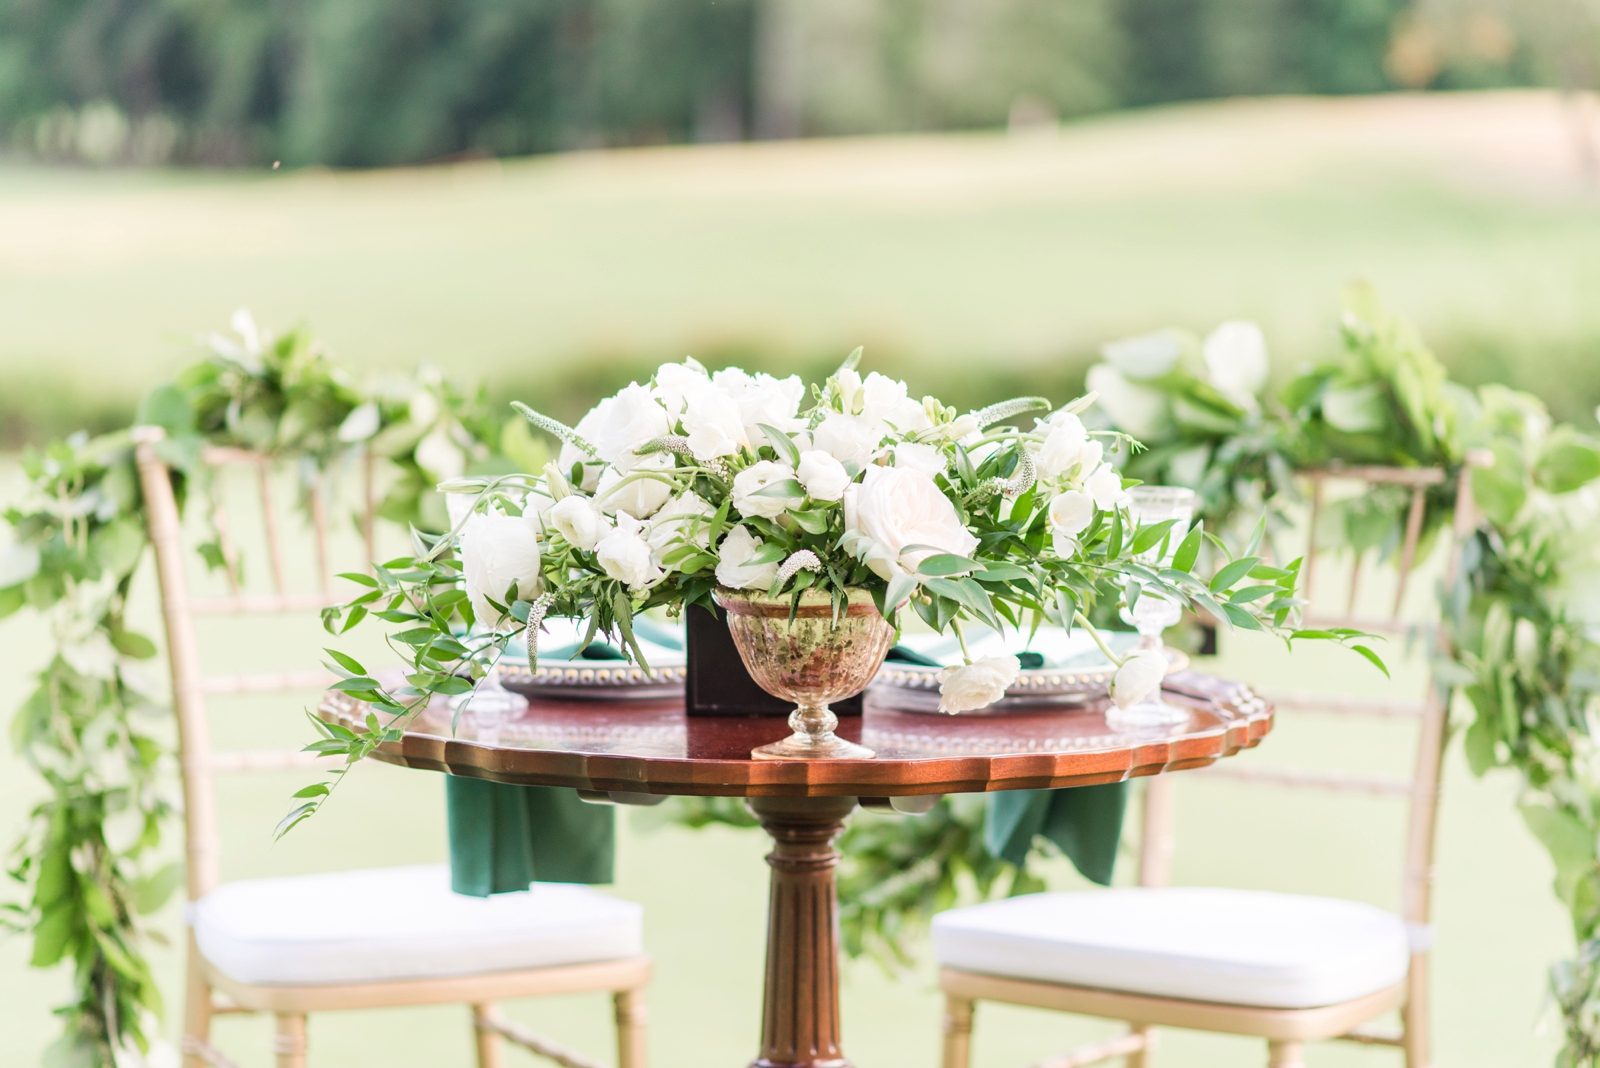 wedding floral design tips by aleen floral design | virginia wedding photographer